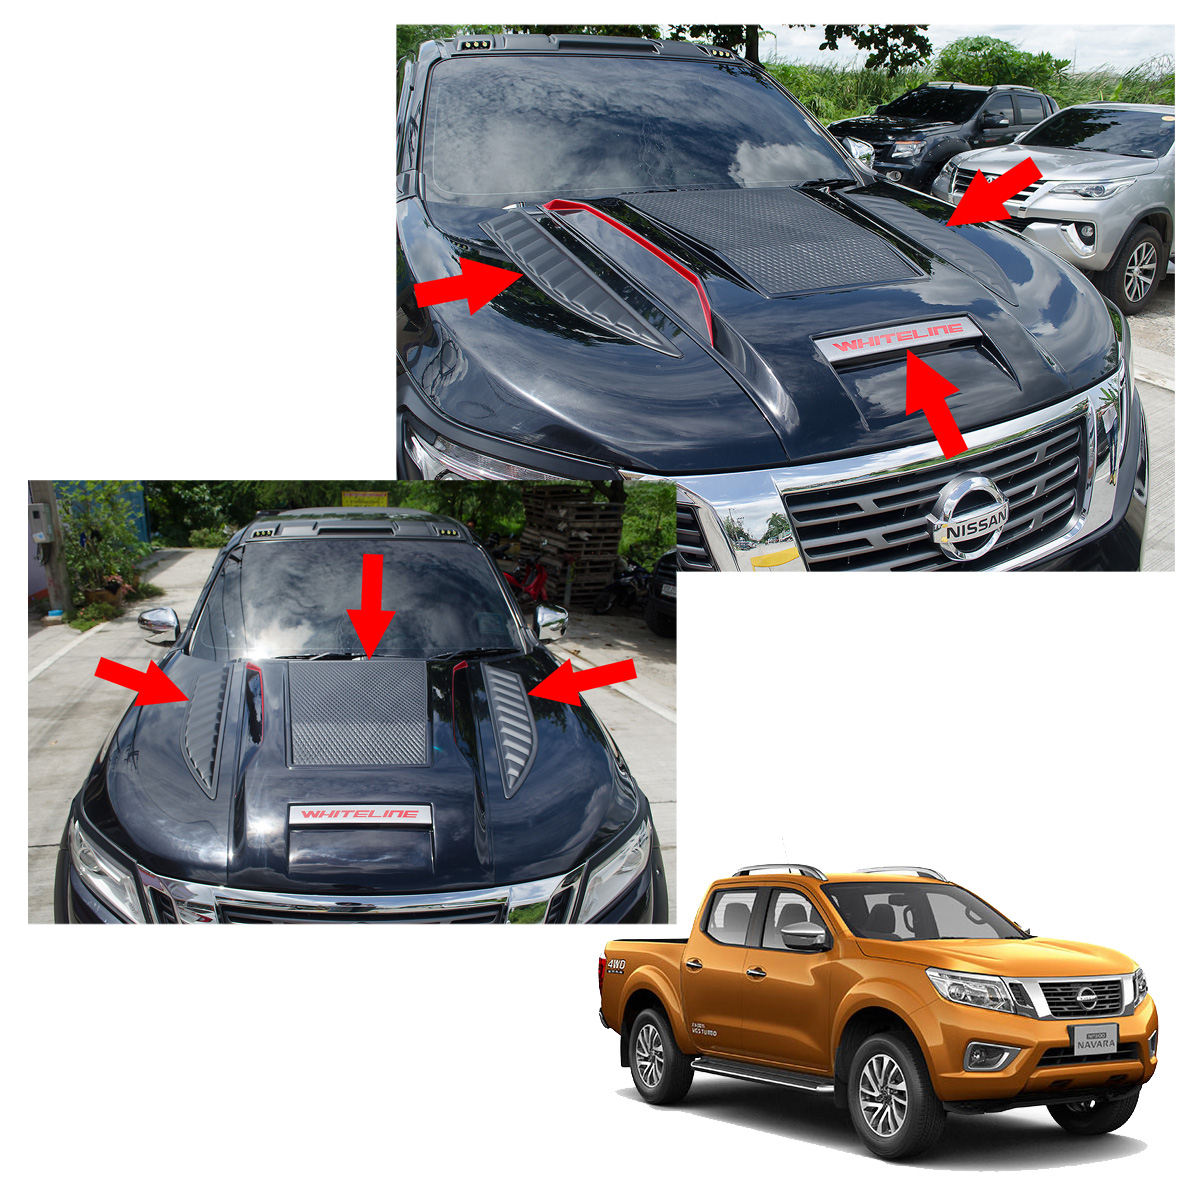 Chrome Bonnet Hood Scoop Air Vent Cover Trim Fit For Nissan Navara D40 05-2014